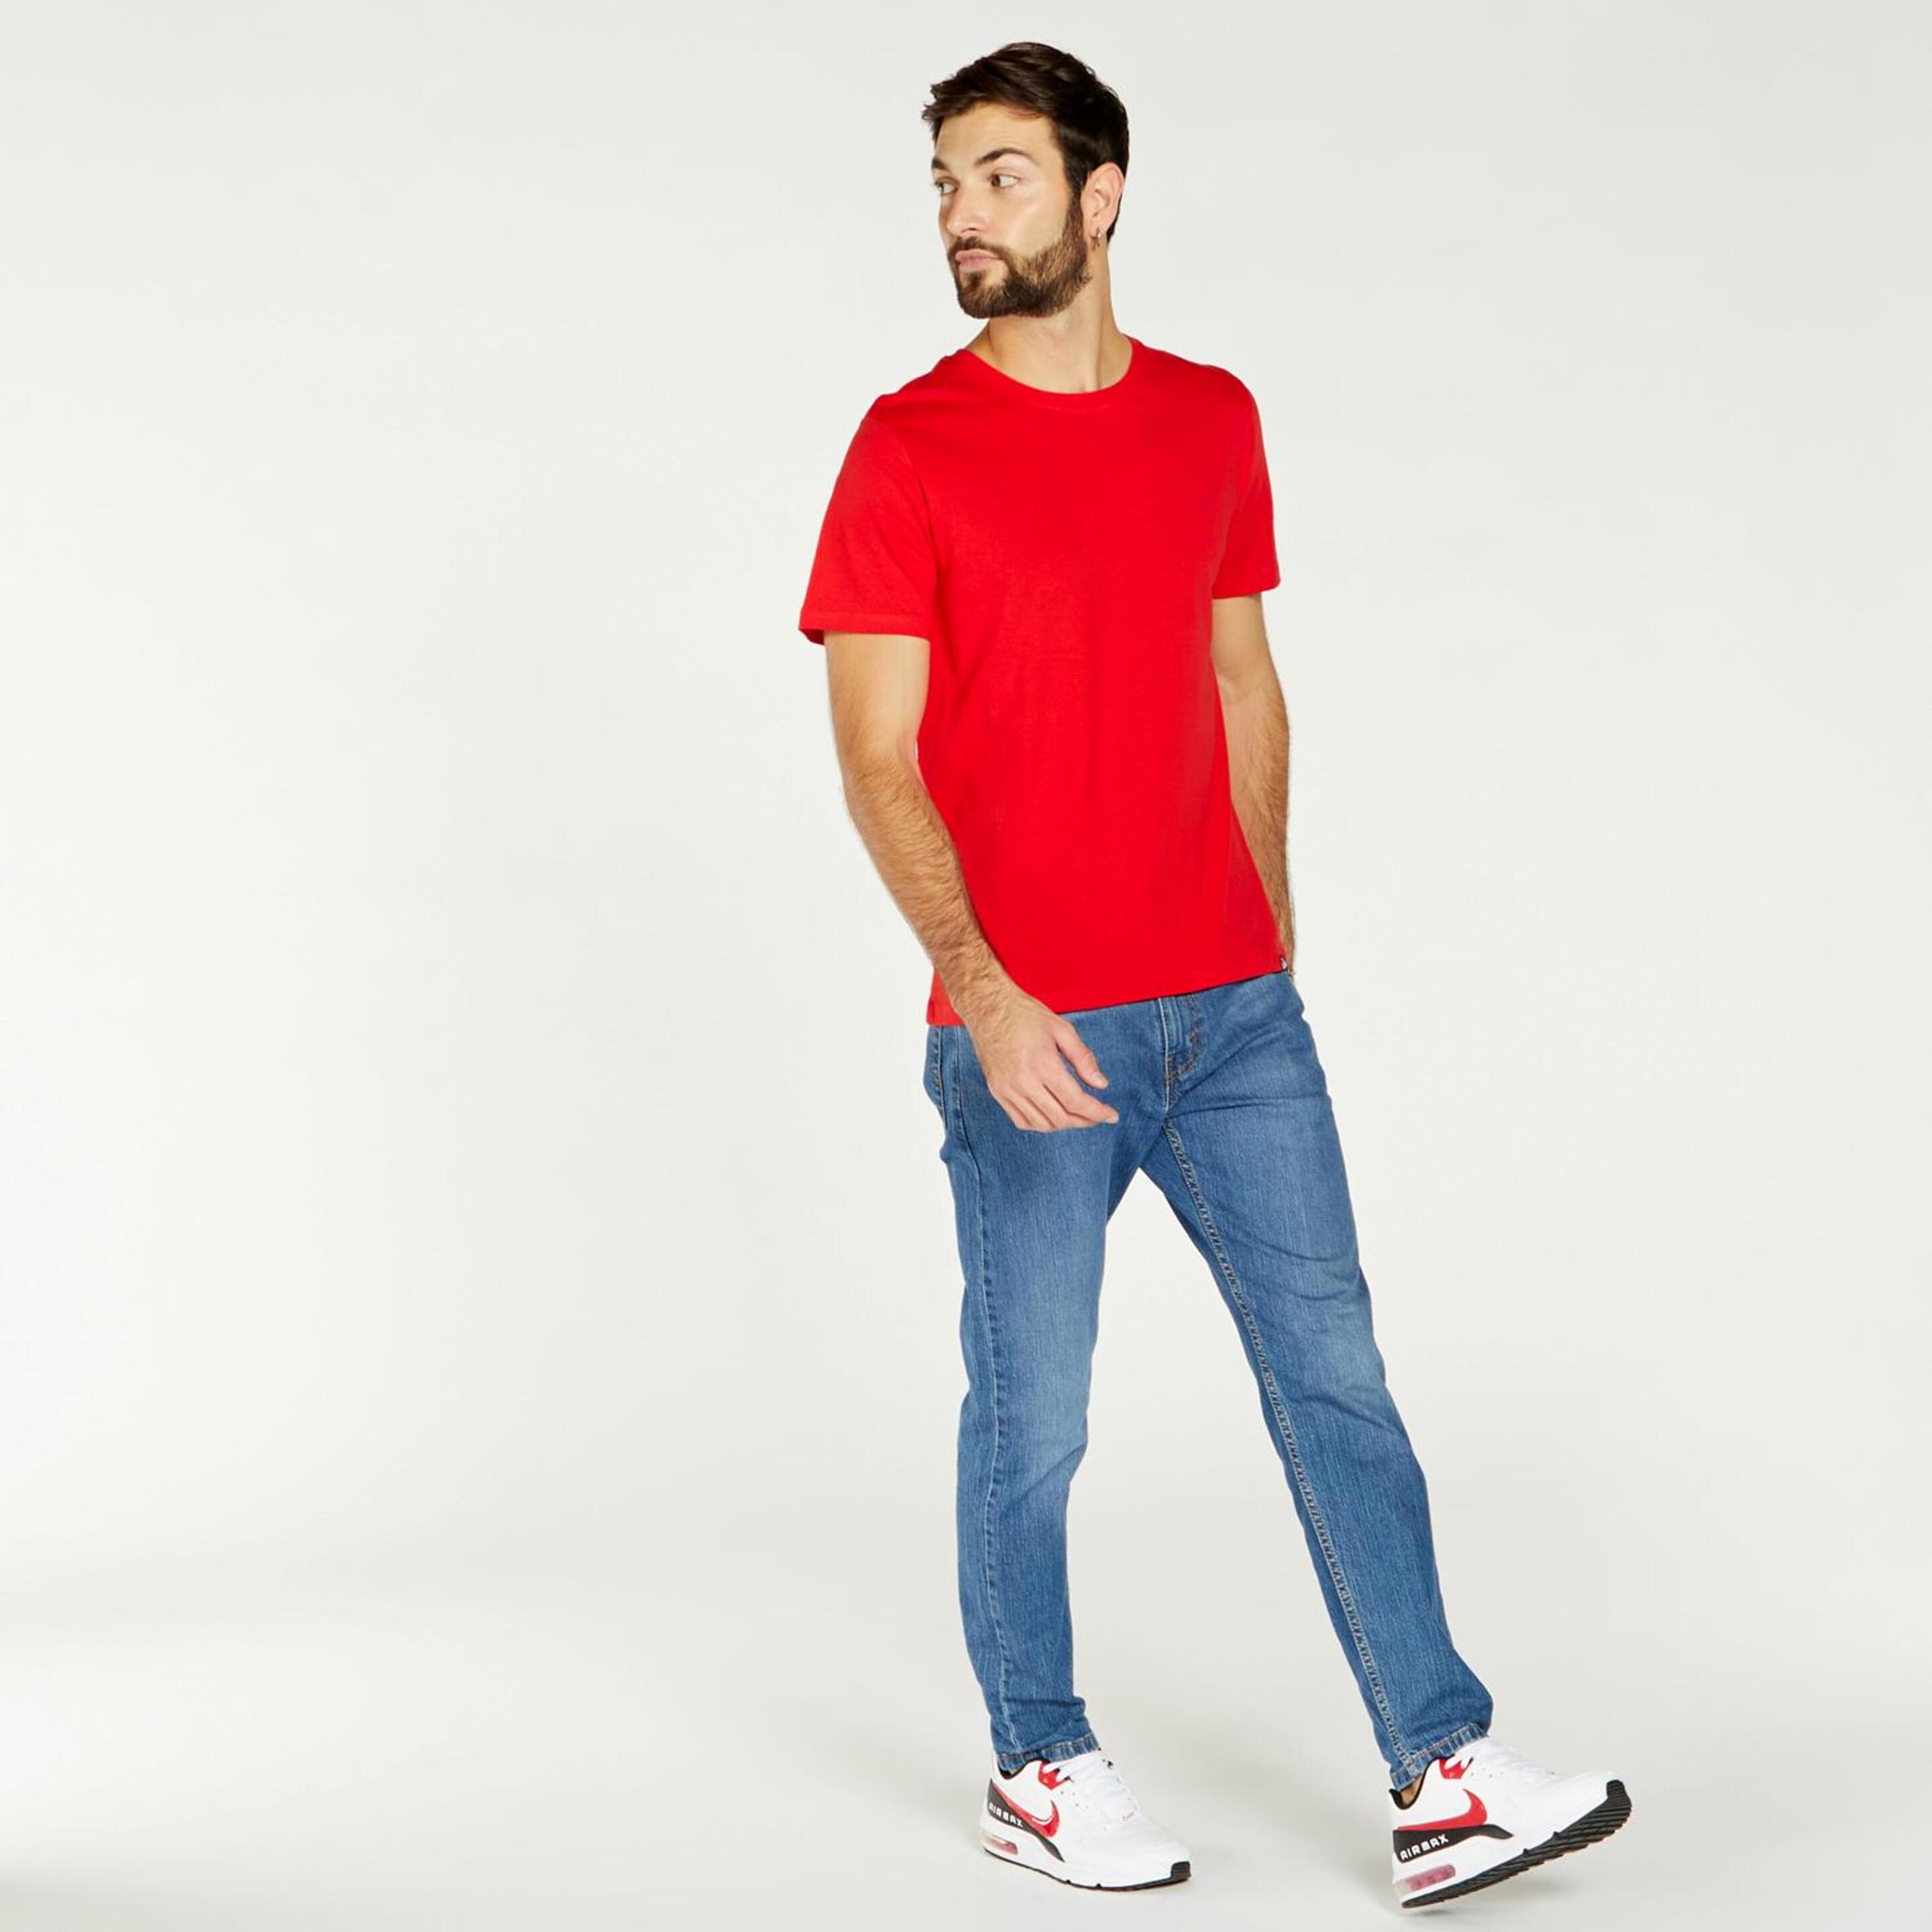 Camiseta Up Basic - Roja - Camiseta Manga Corta Hombre